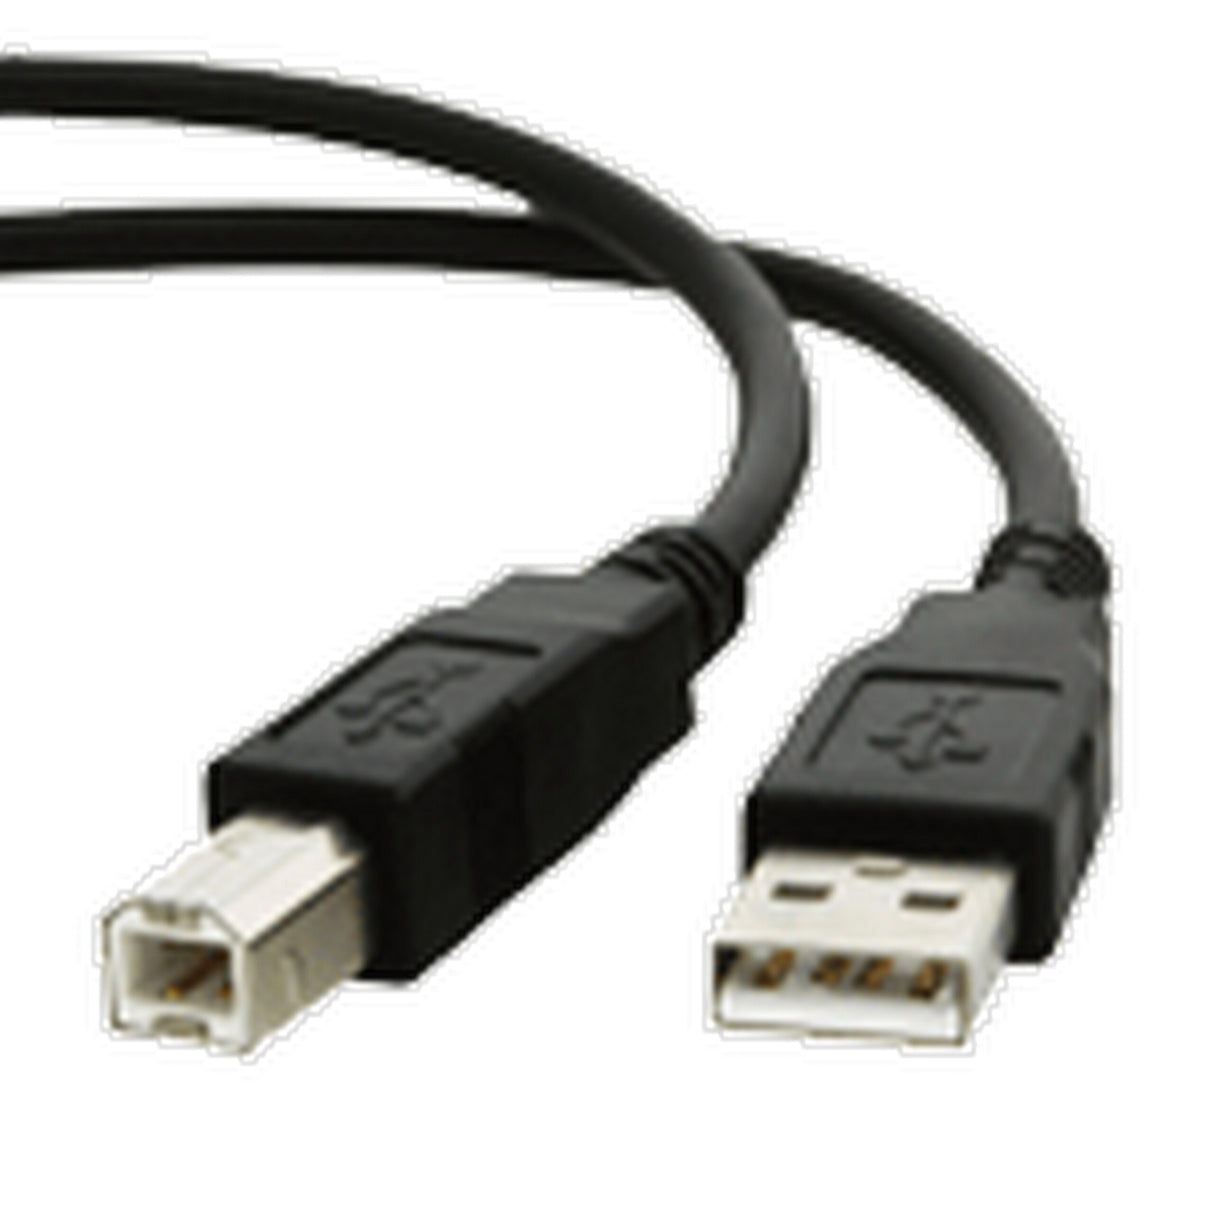 Elmo 5ZA0000437 Replacement USB Cable for TT-02u, TT-02s, TT-02RX, P10, P10S